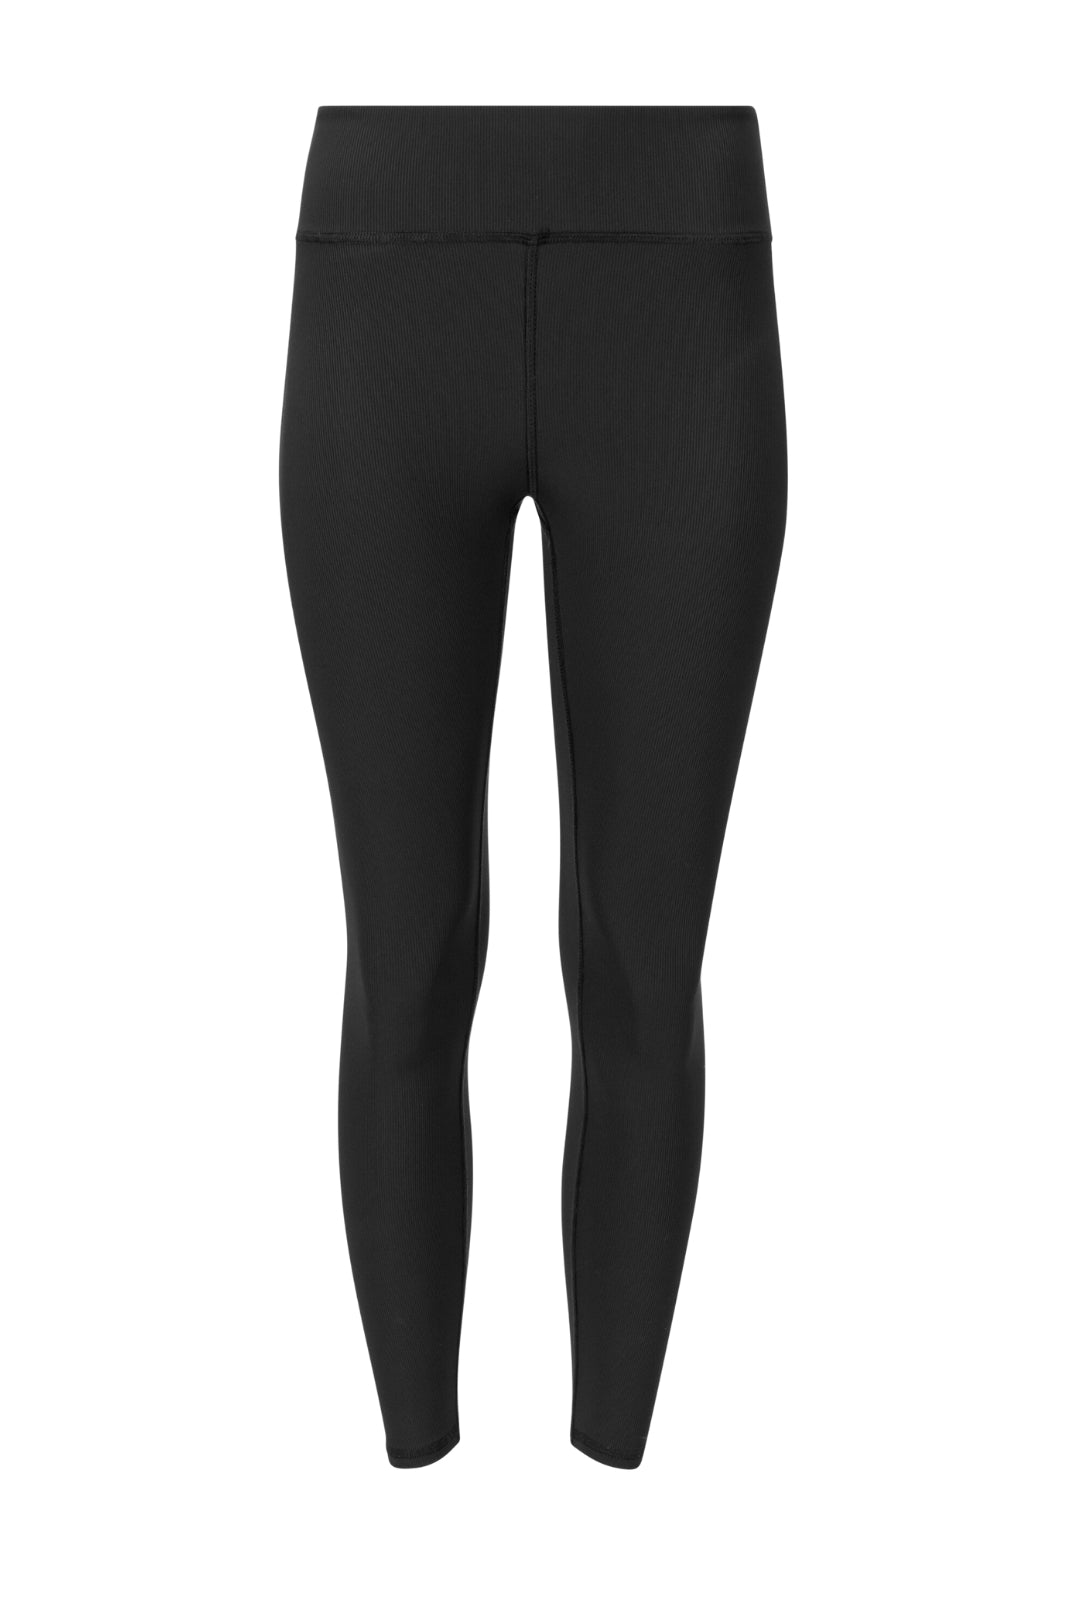 UPF 50+ activewear leggings